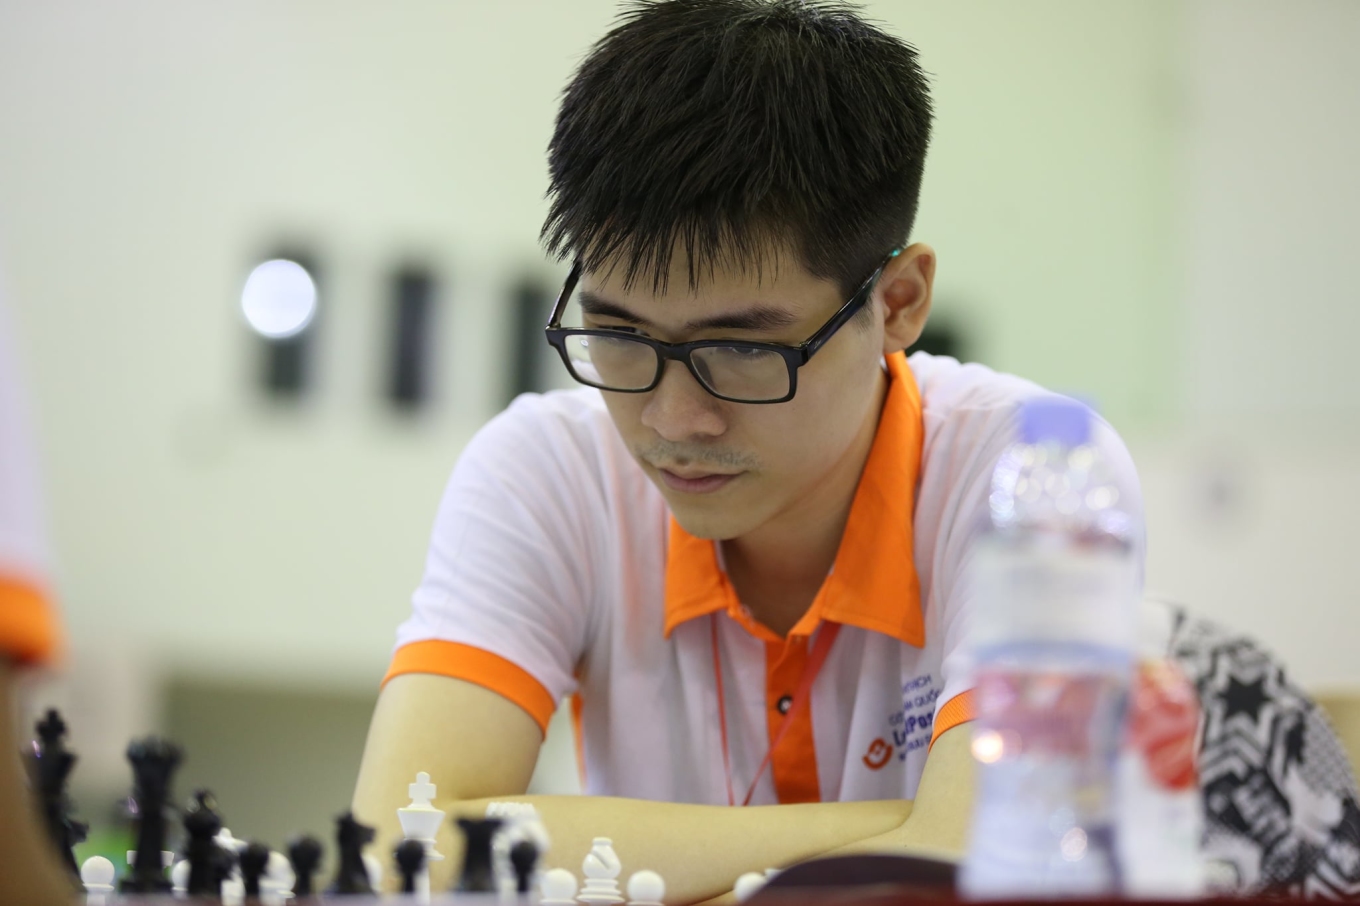 Le Tuan Minh at the national chess championship in 2020. Photo by VnExpress/Xuan Binh